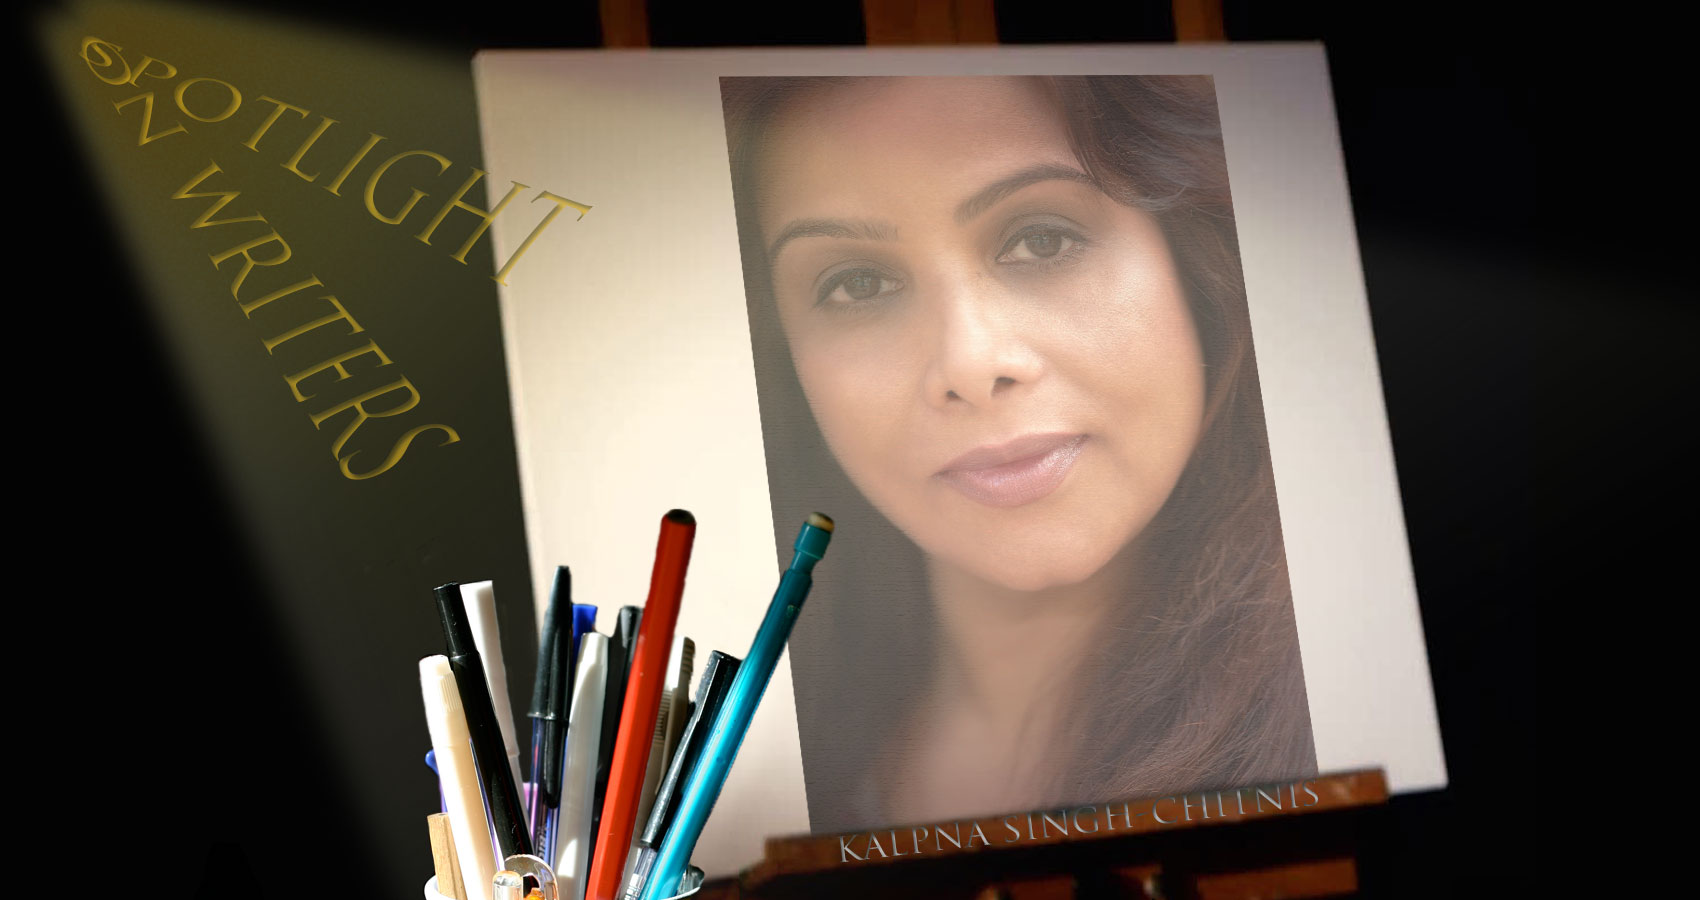 Spotlight On Writers - Kalpna Singh-Chitnis, interview at Spillwords.com